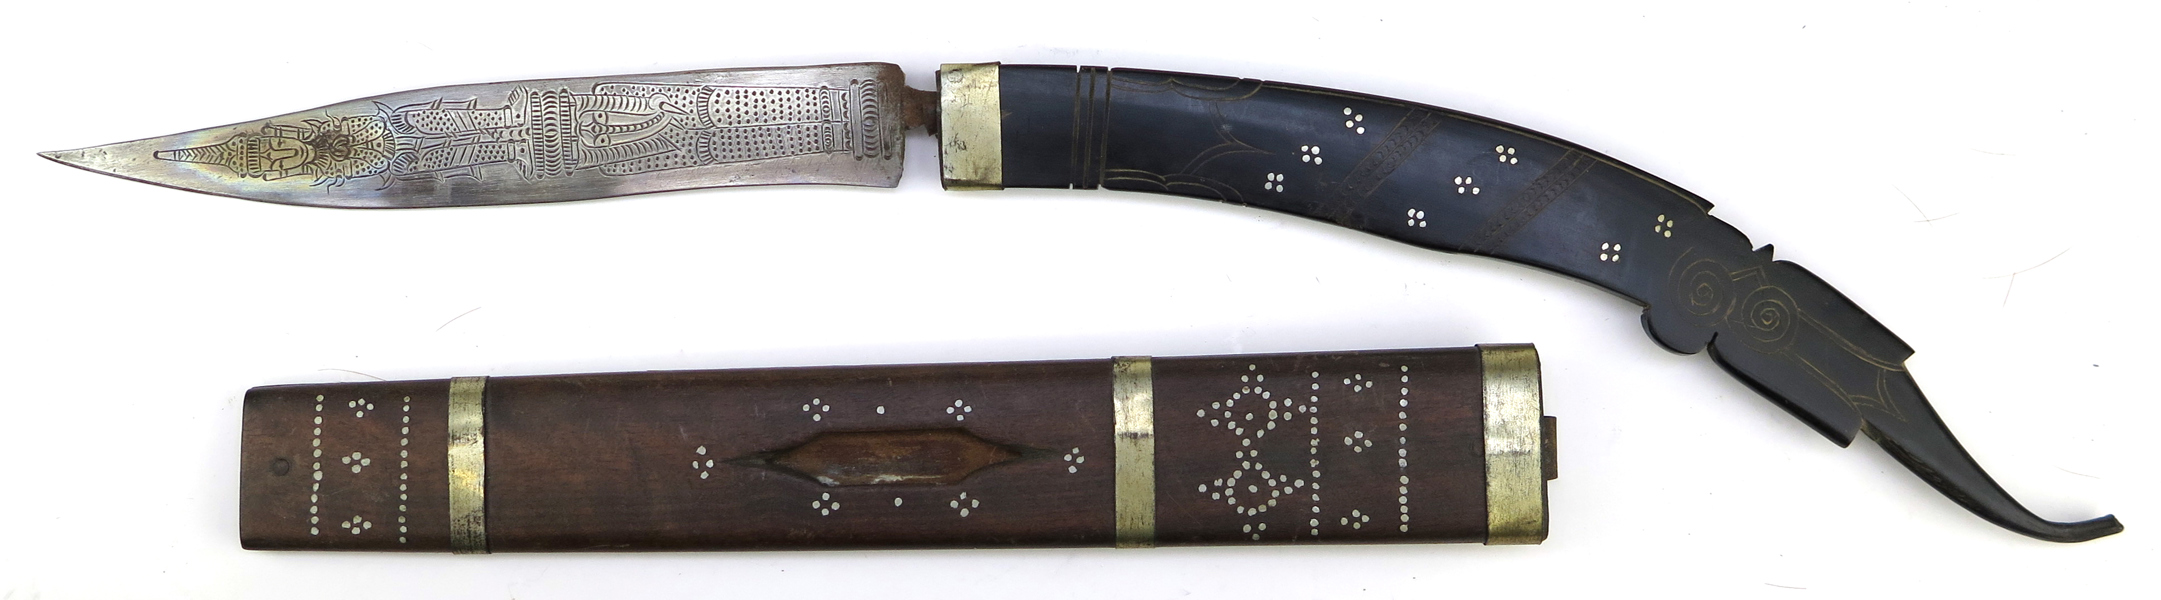 Kniv i balja, trä, horn och smide, så kallad Chin, Burma, 1900-tal. rikt dekorerad klinga, total l 63 cm_31145a_lg.jpeg